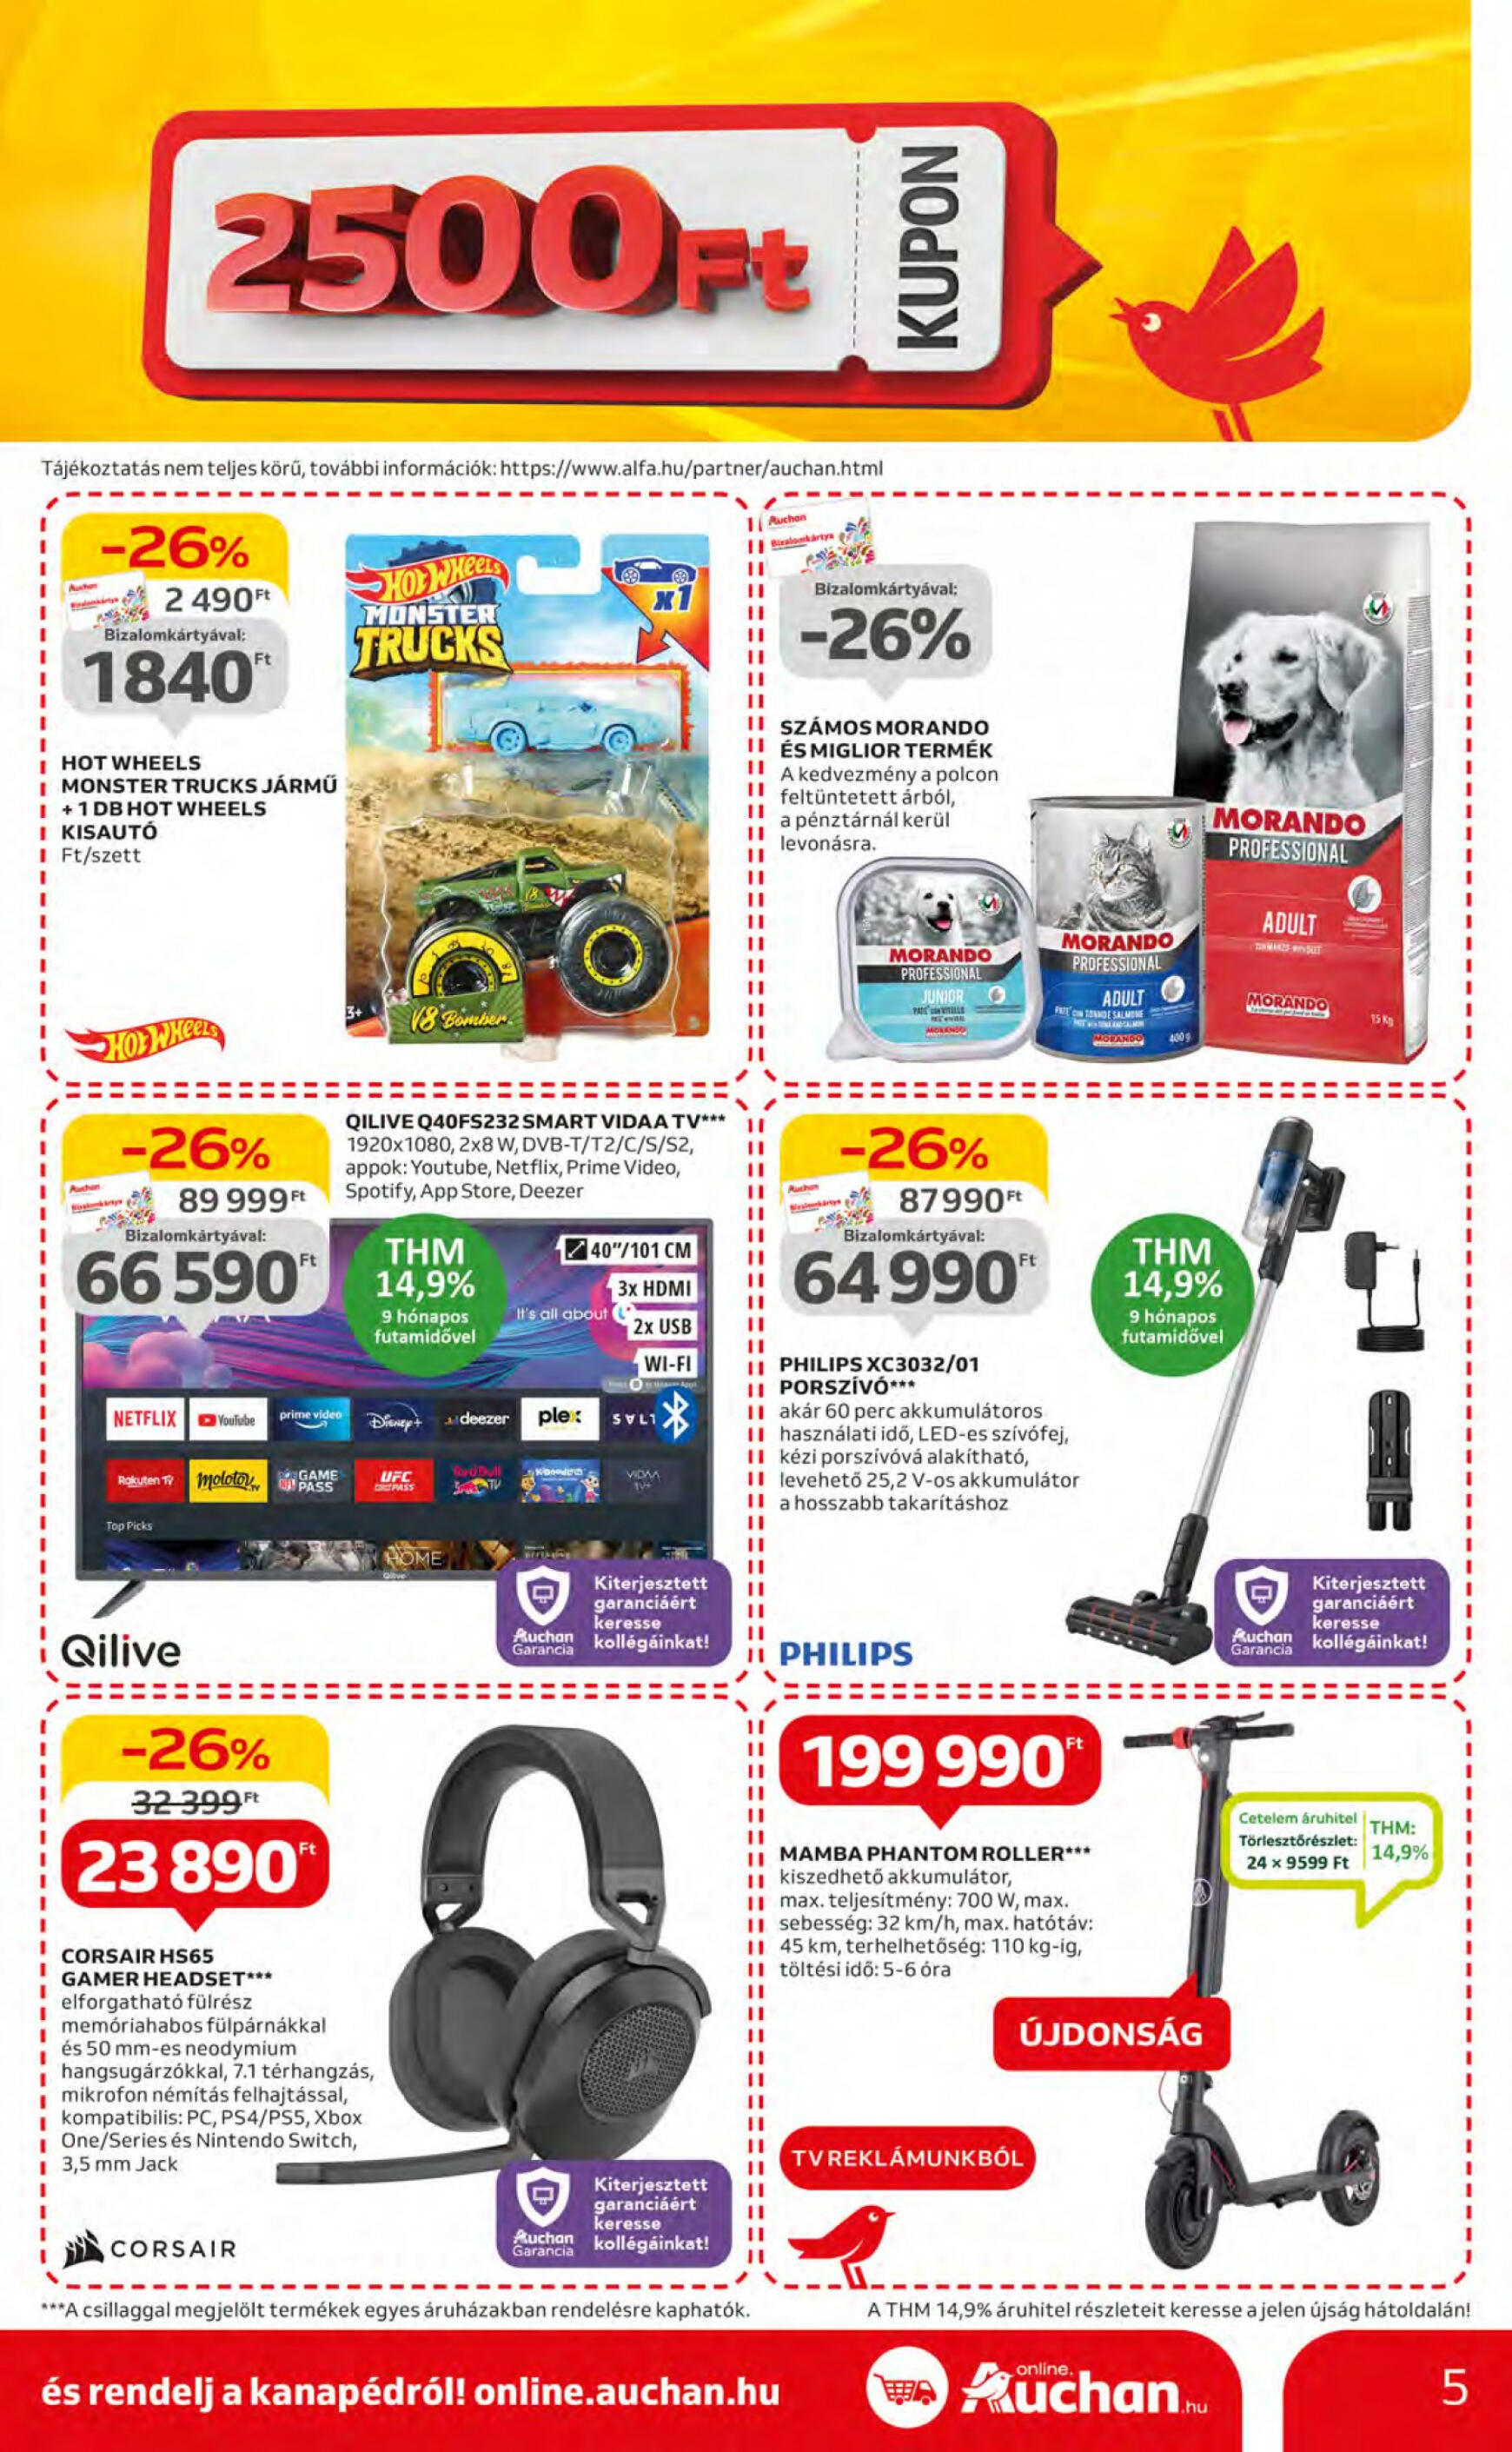 auchan - Aktuális újság Auchan 05.09. - 05.15. - page: 5